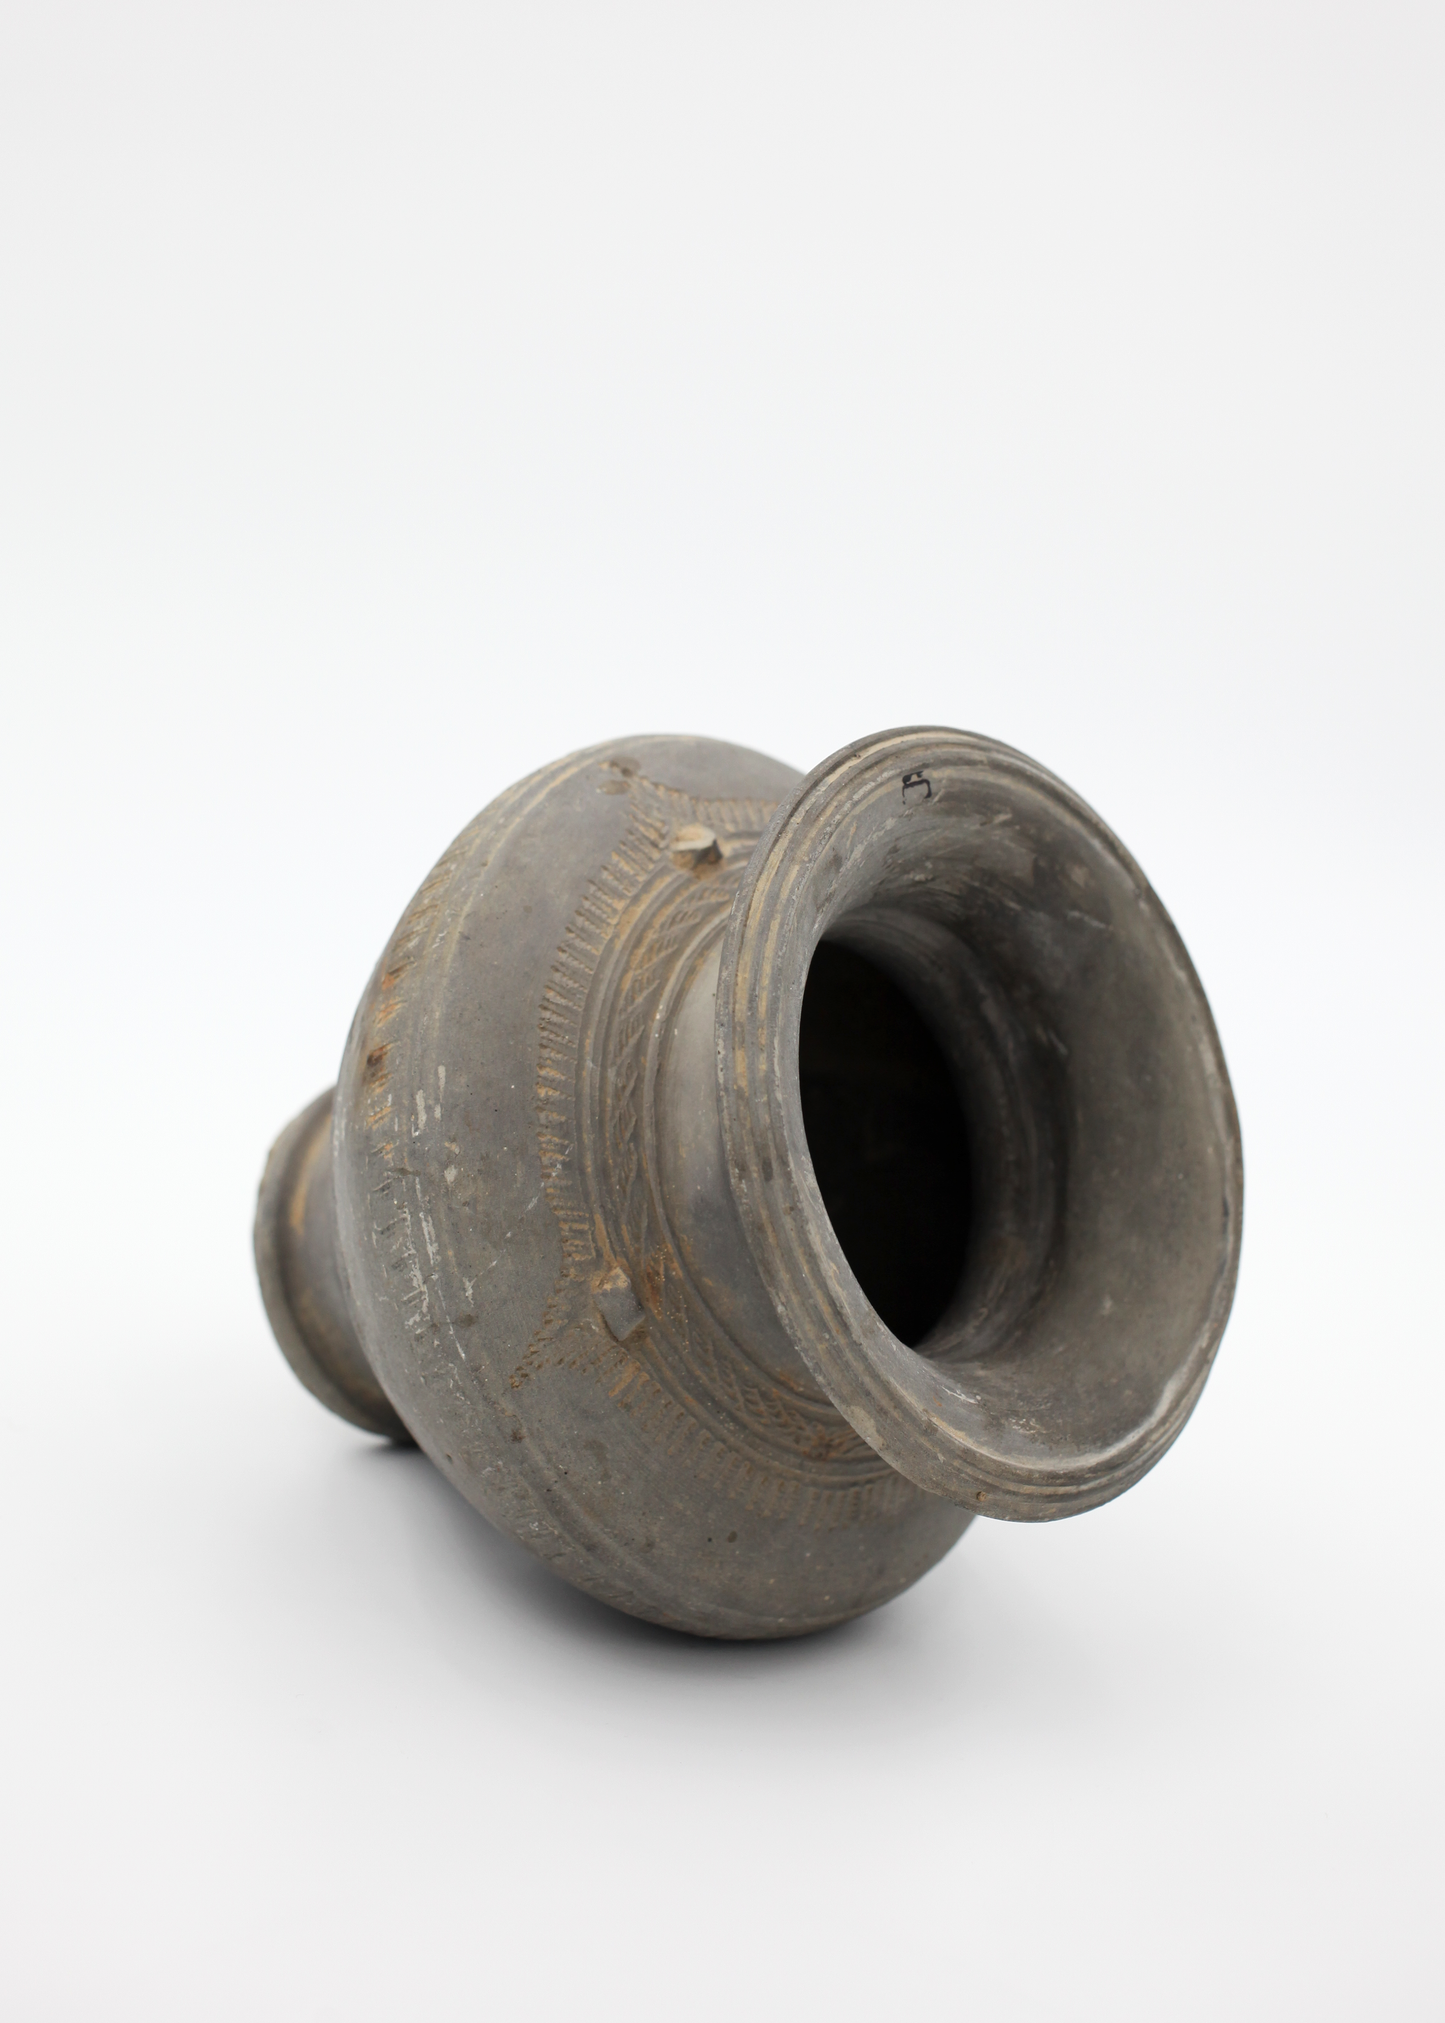 12th/13th Century Thai Khmer Pottery Jar